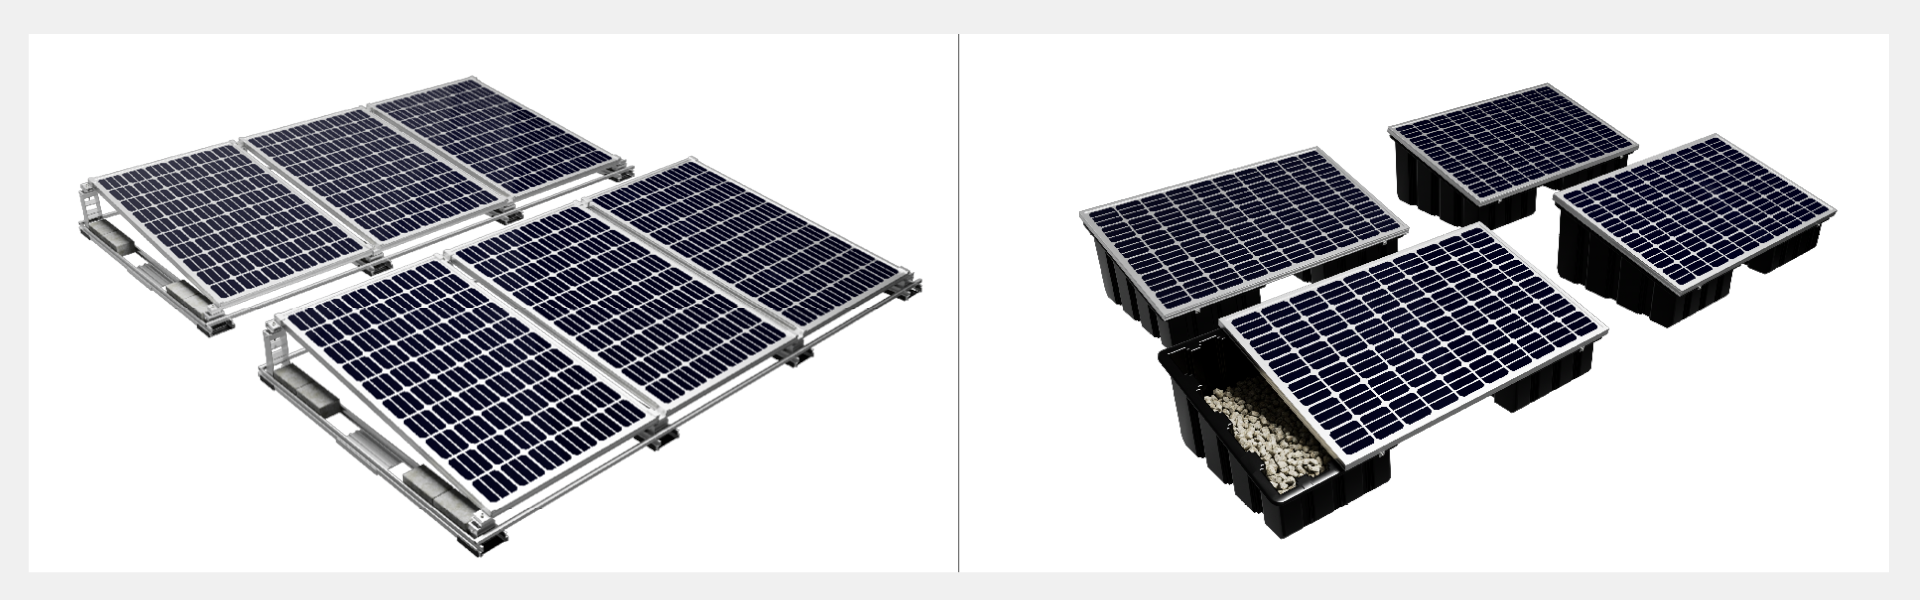 solar-t2-solar-montage-flachdach-1920x1040px.png